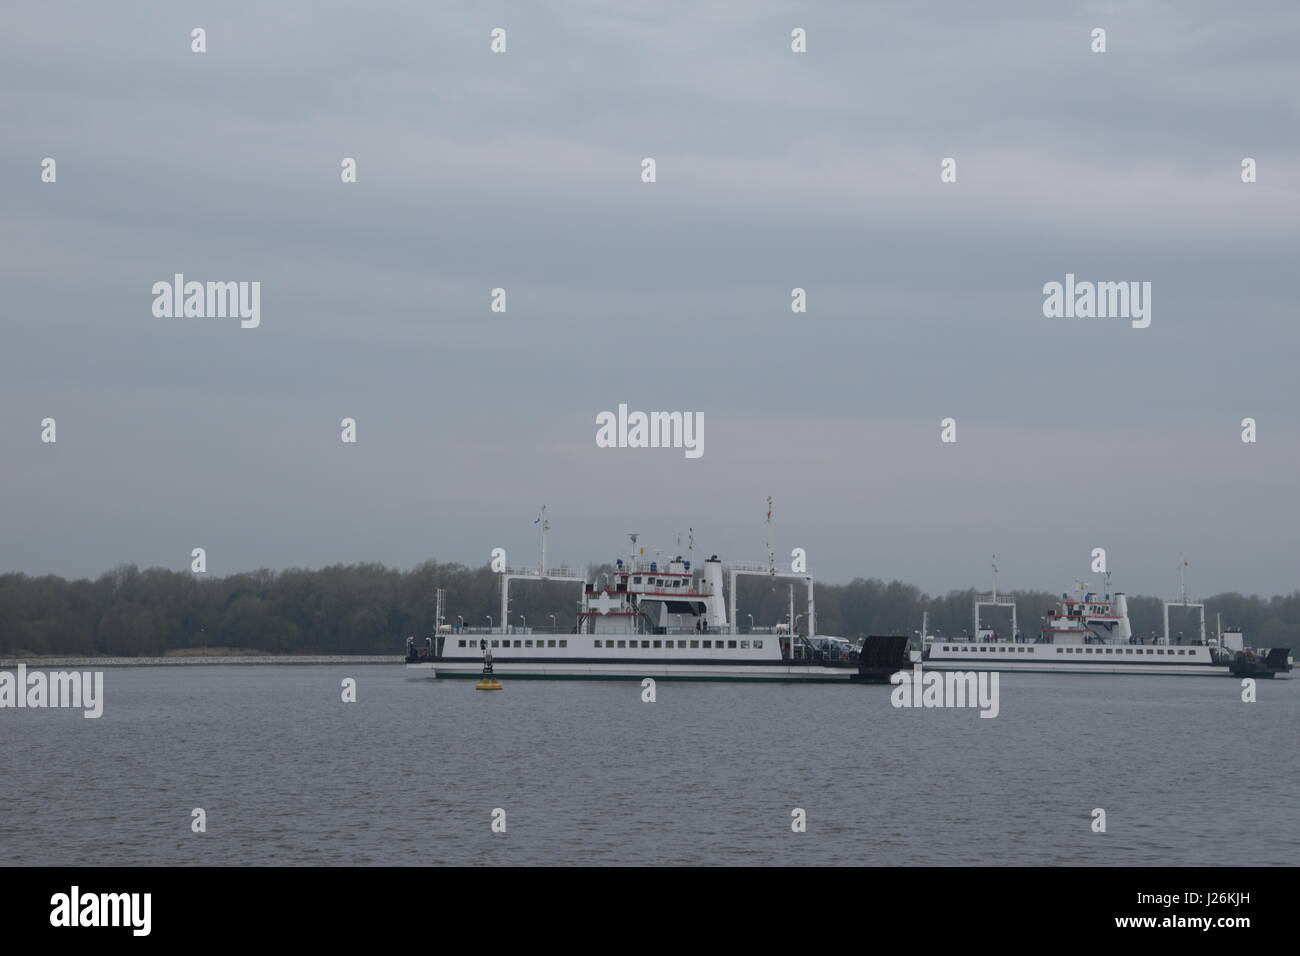 Car ferries across Swina river to Swinoujscie in Poland Stock Photo